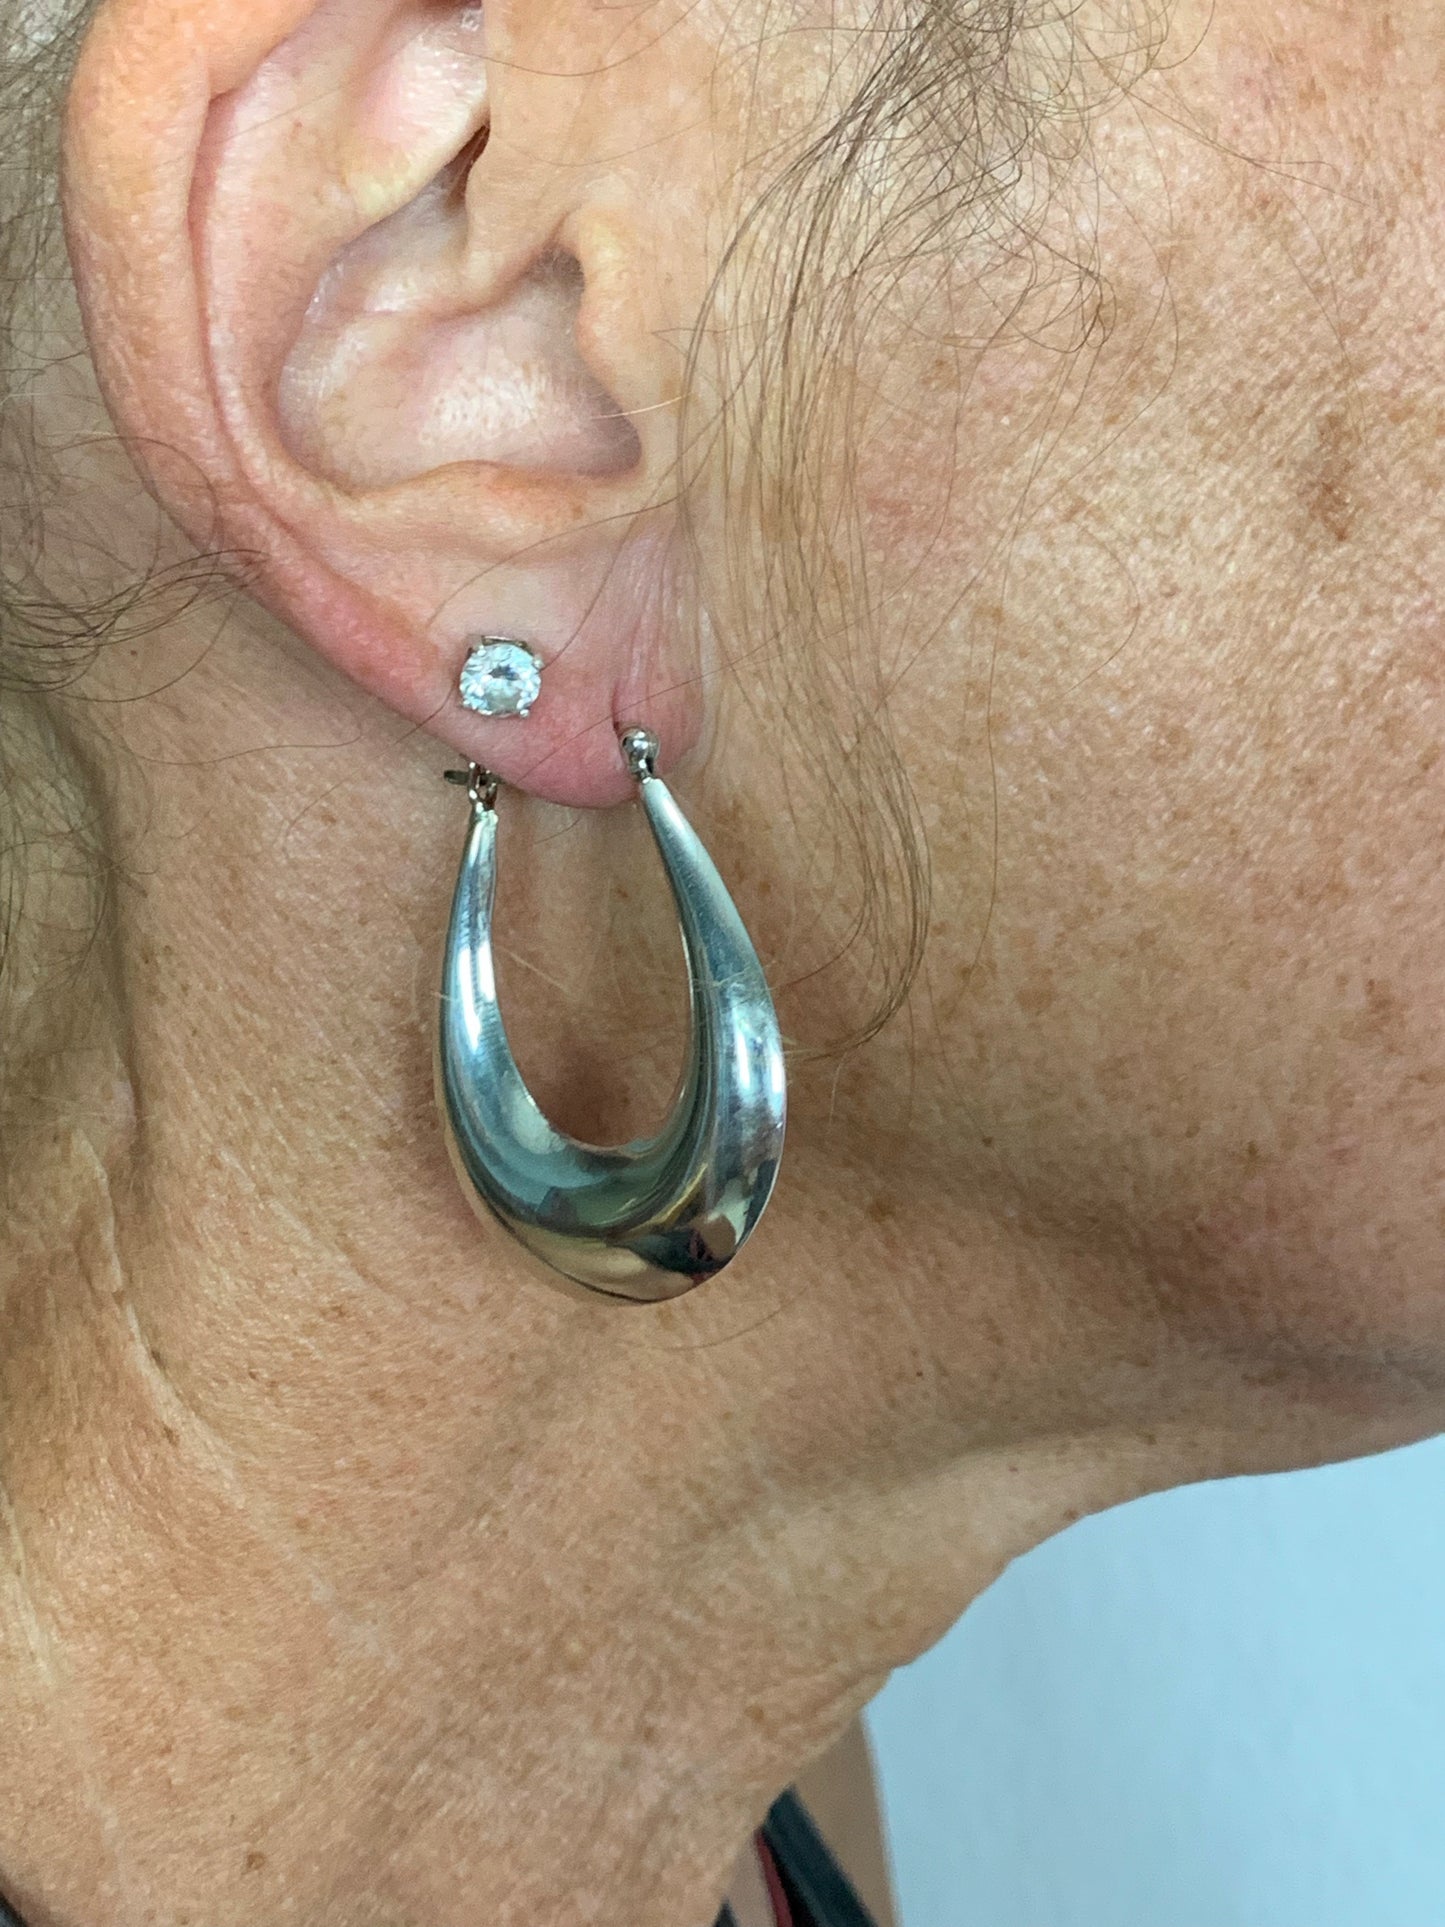 Sterling silver oval hoop earrings